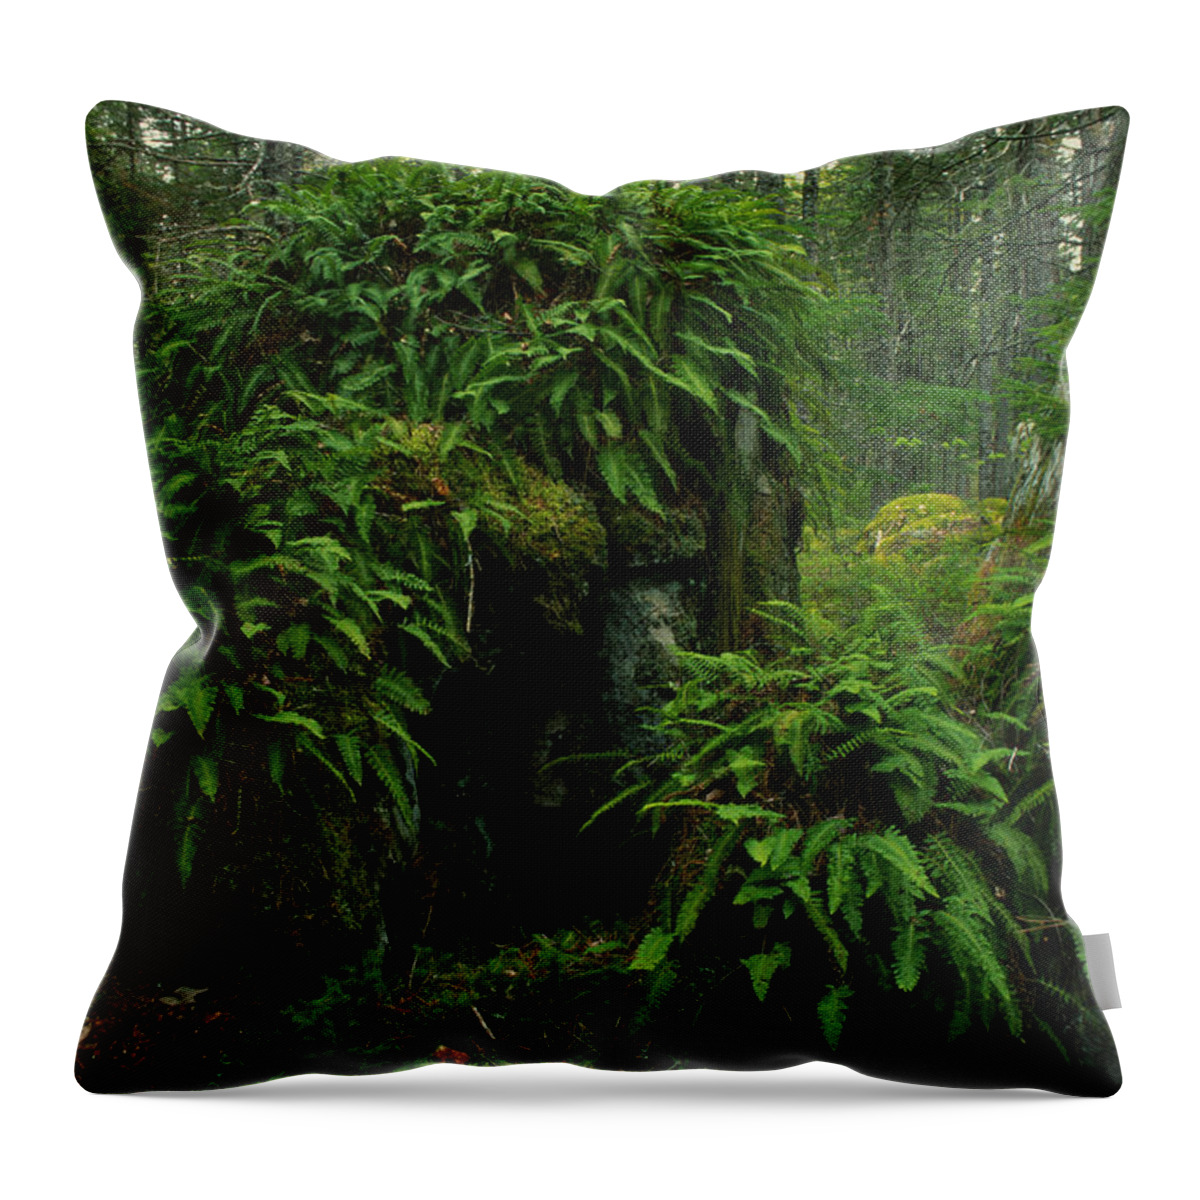 Ferns Throw Pillow featuring the photograph Fern and Moss Covered Erratics by Irwin Barrett